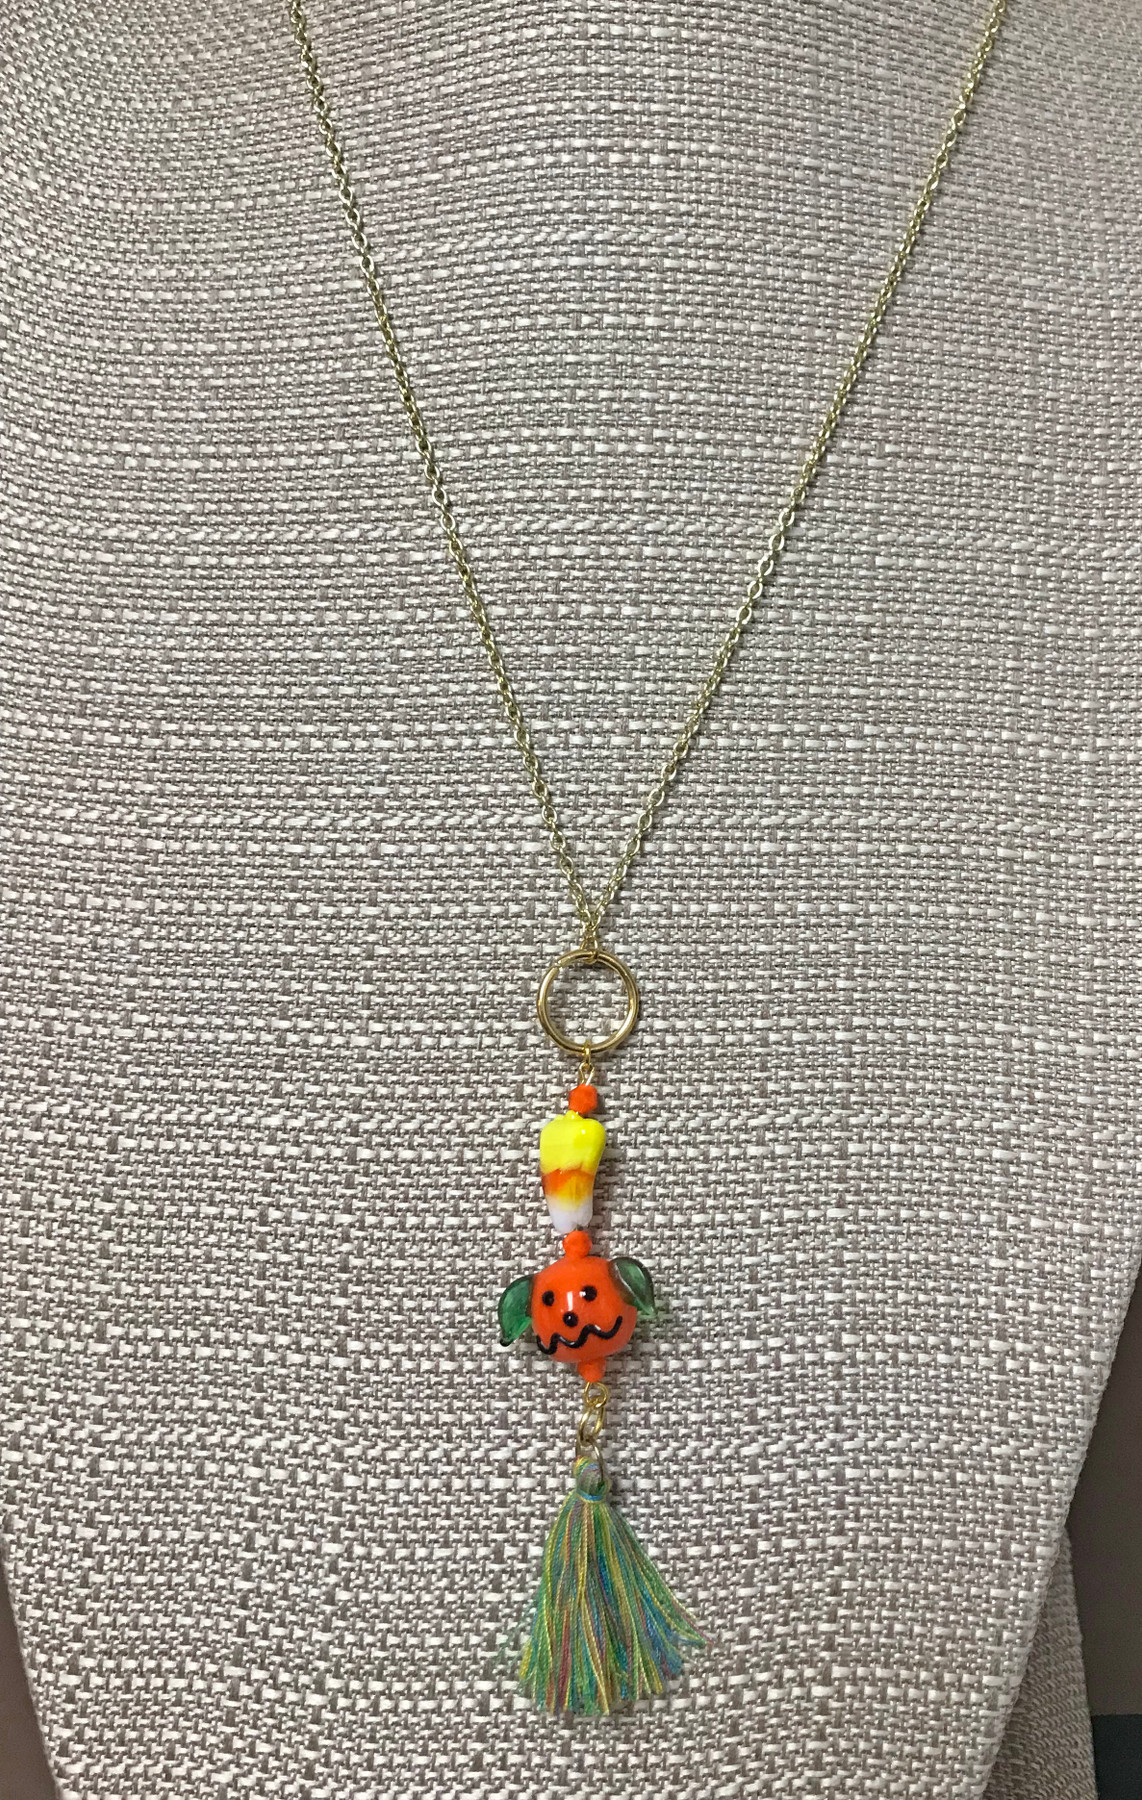 Funfetti Designs - ONE Black/Orange Candy Corn Necklace $12.00 | Facebook